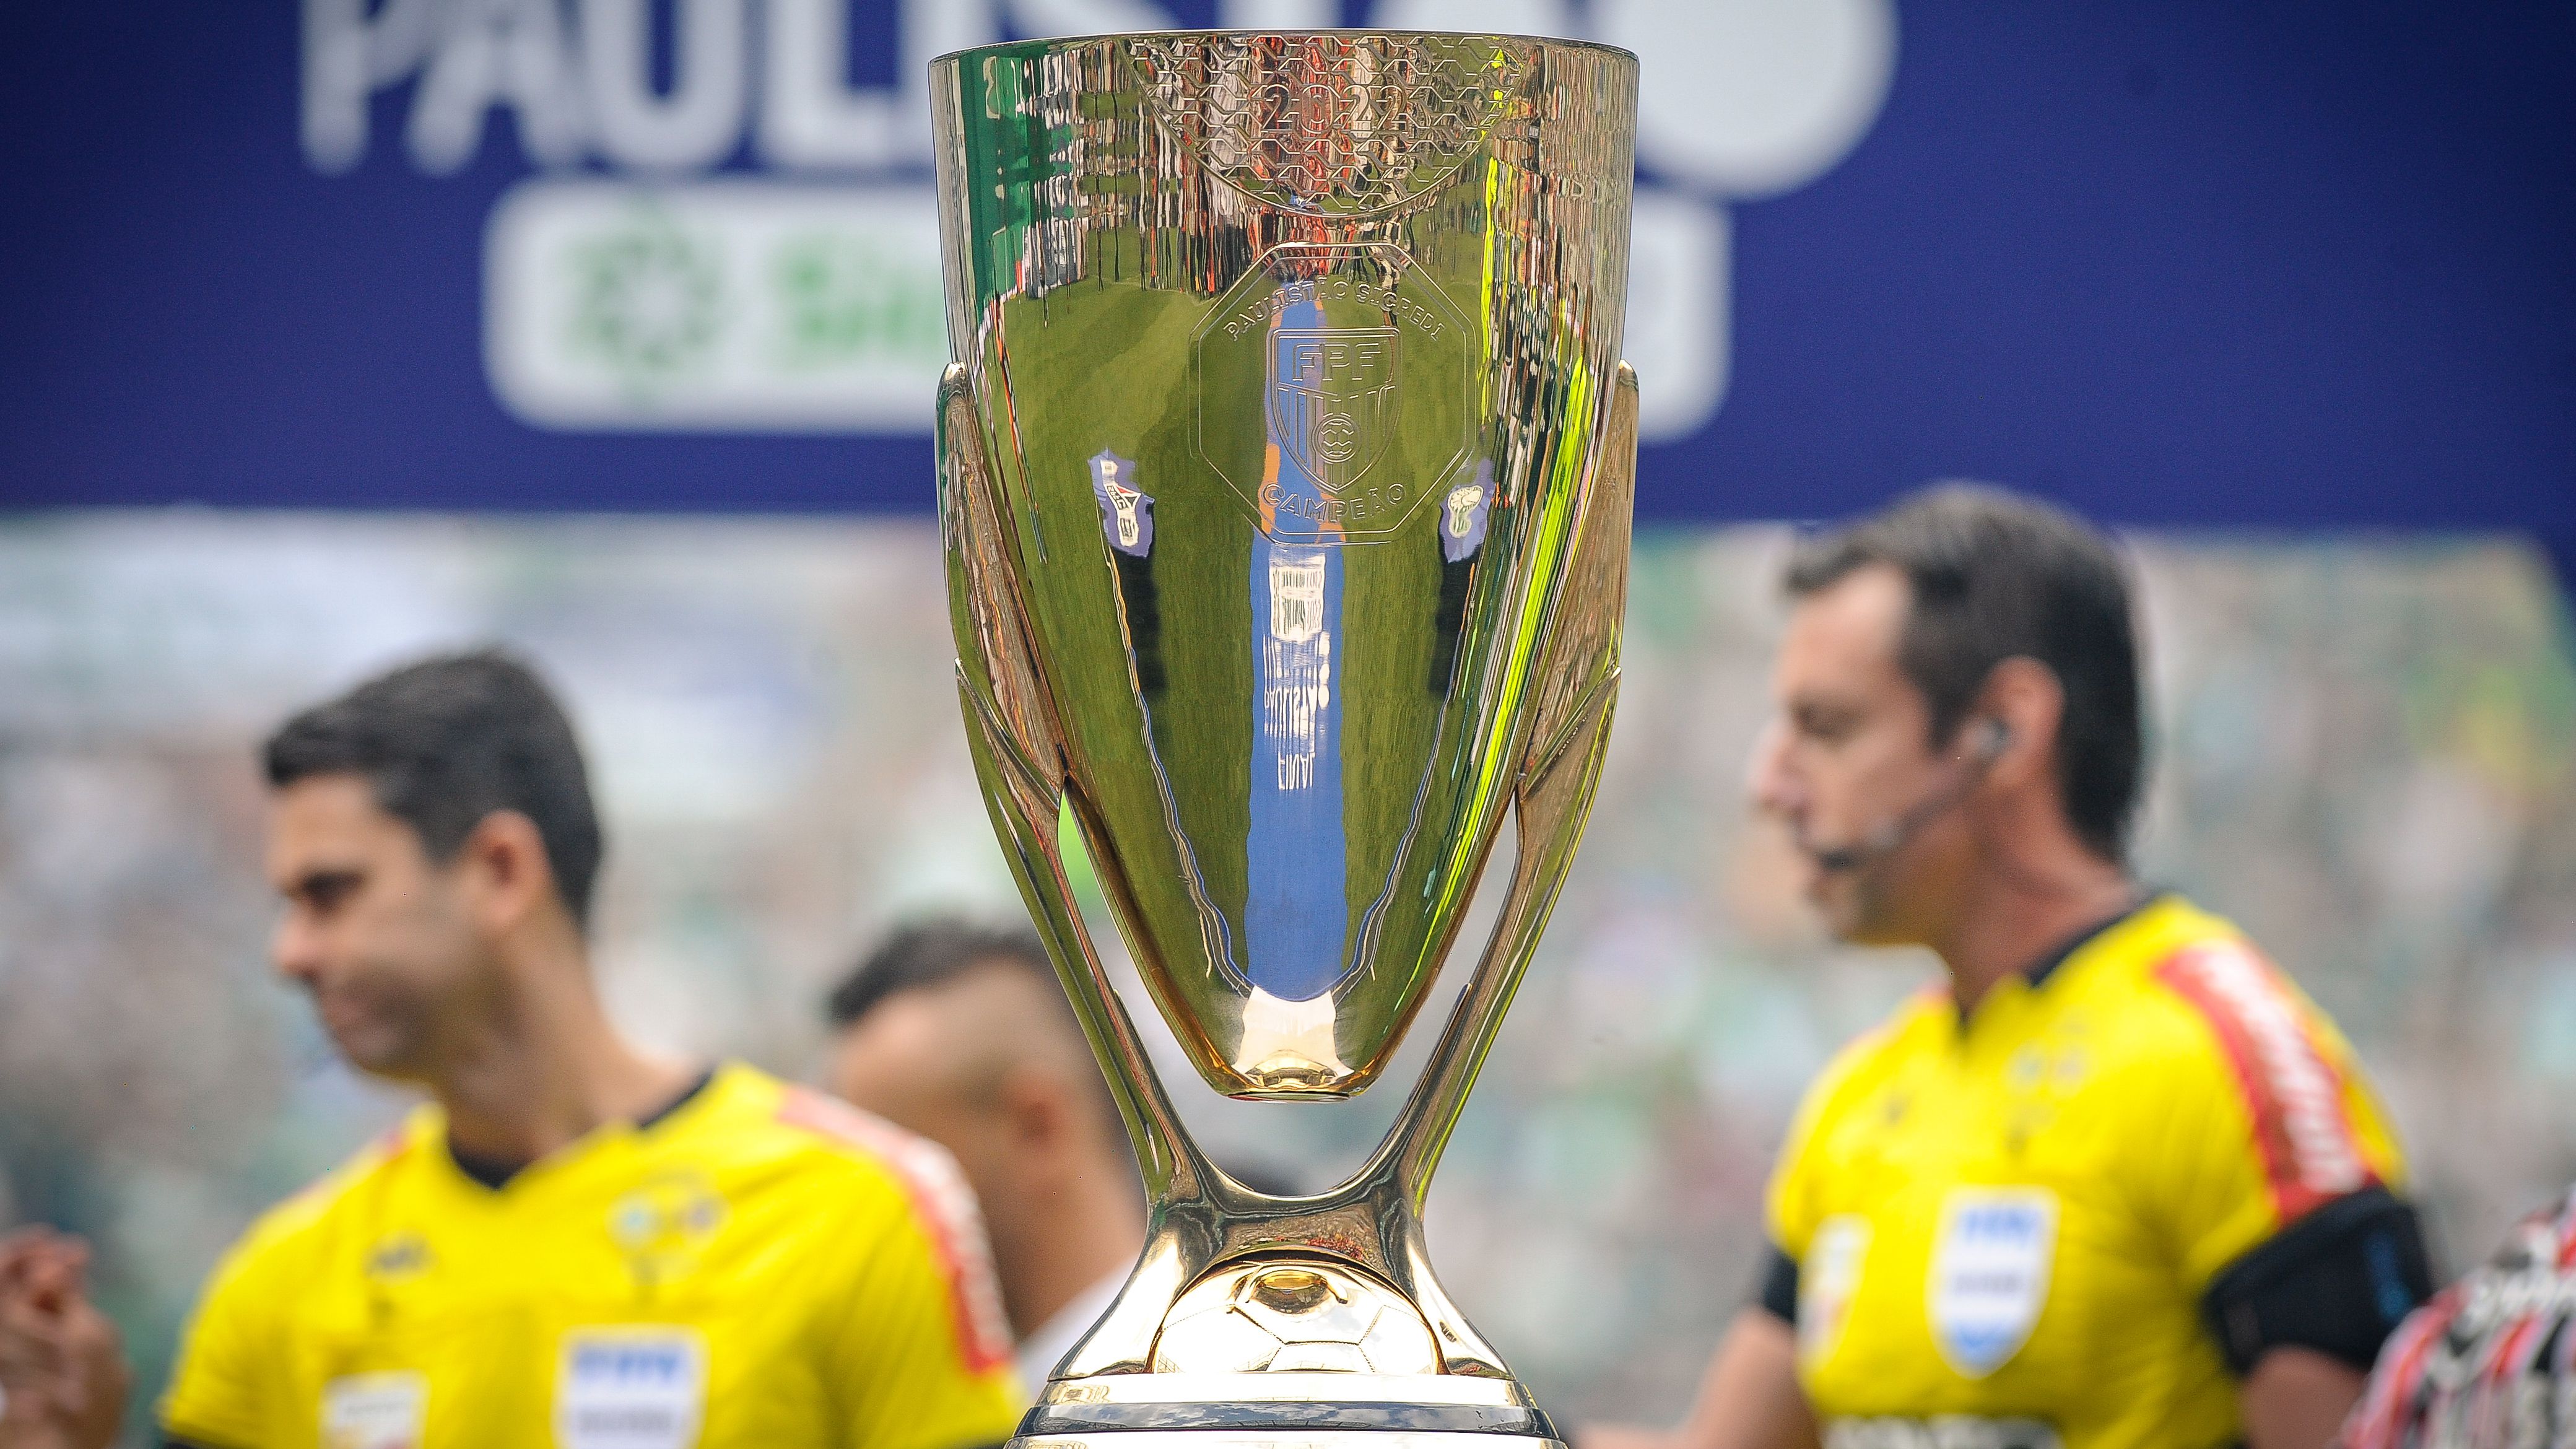 Campeonato Paulista 2023 será transmitido a partir de domingo na